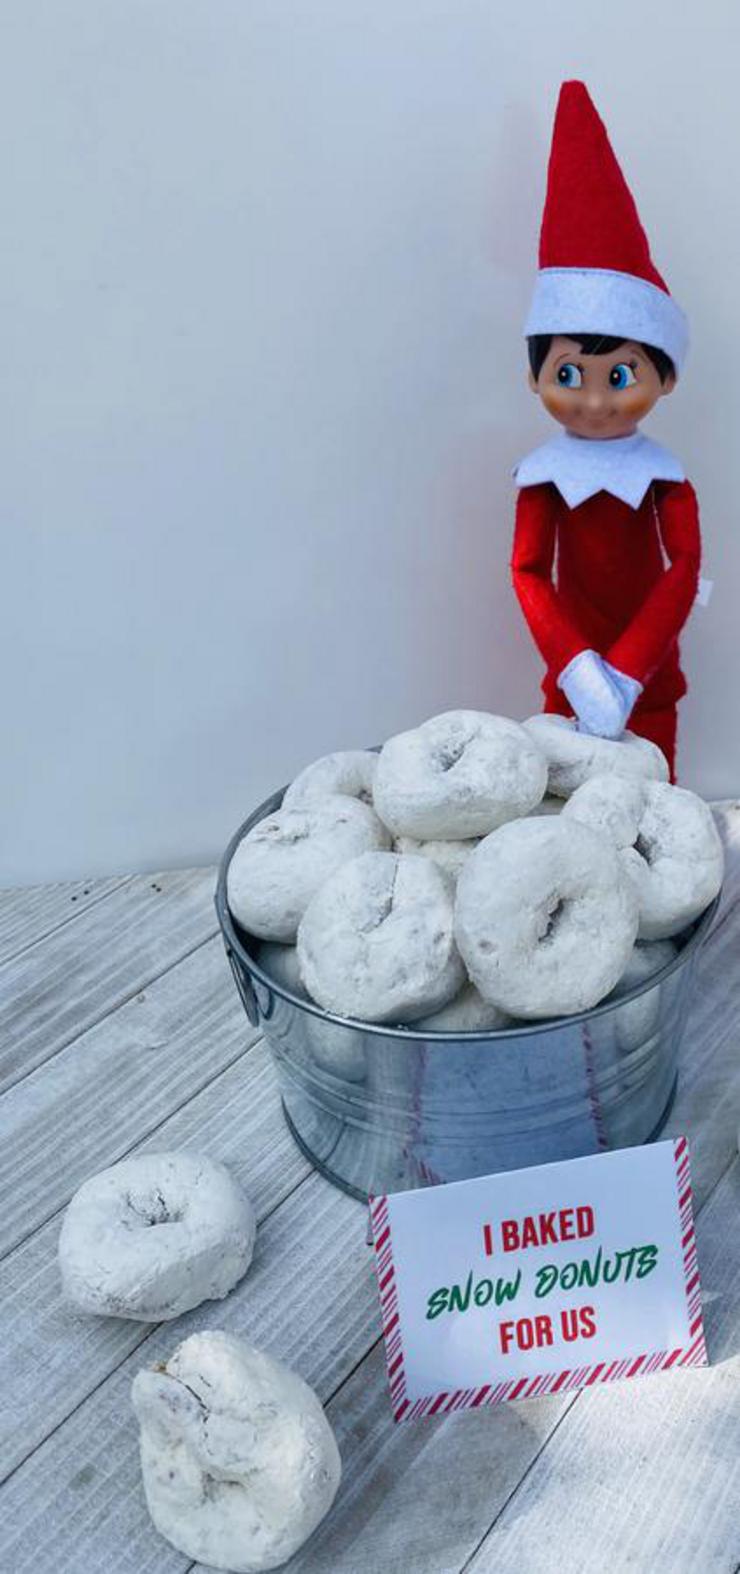 Elf On The Shelf Snow Donuts